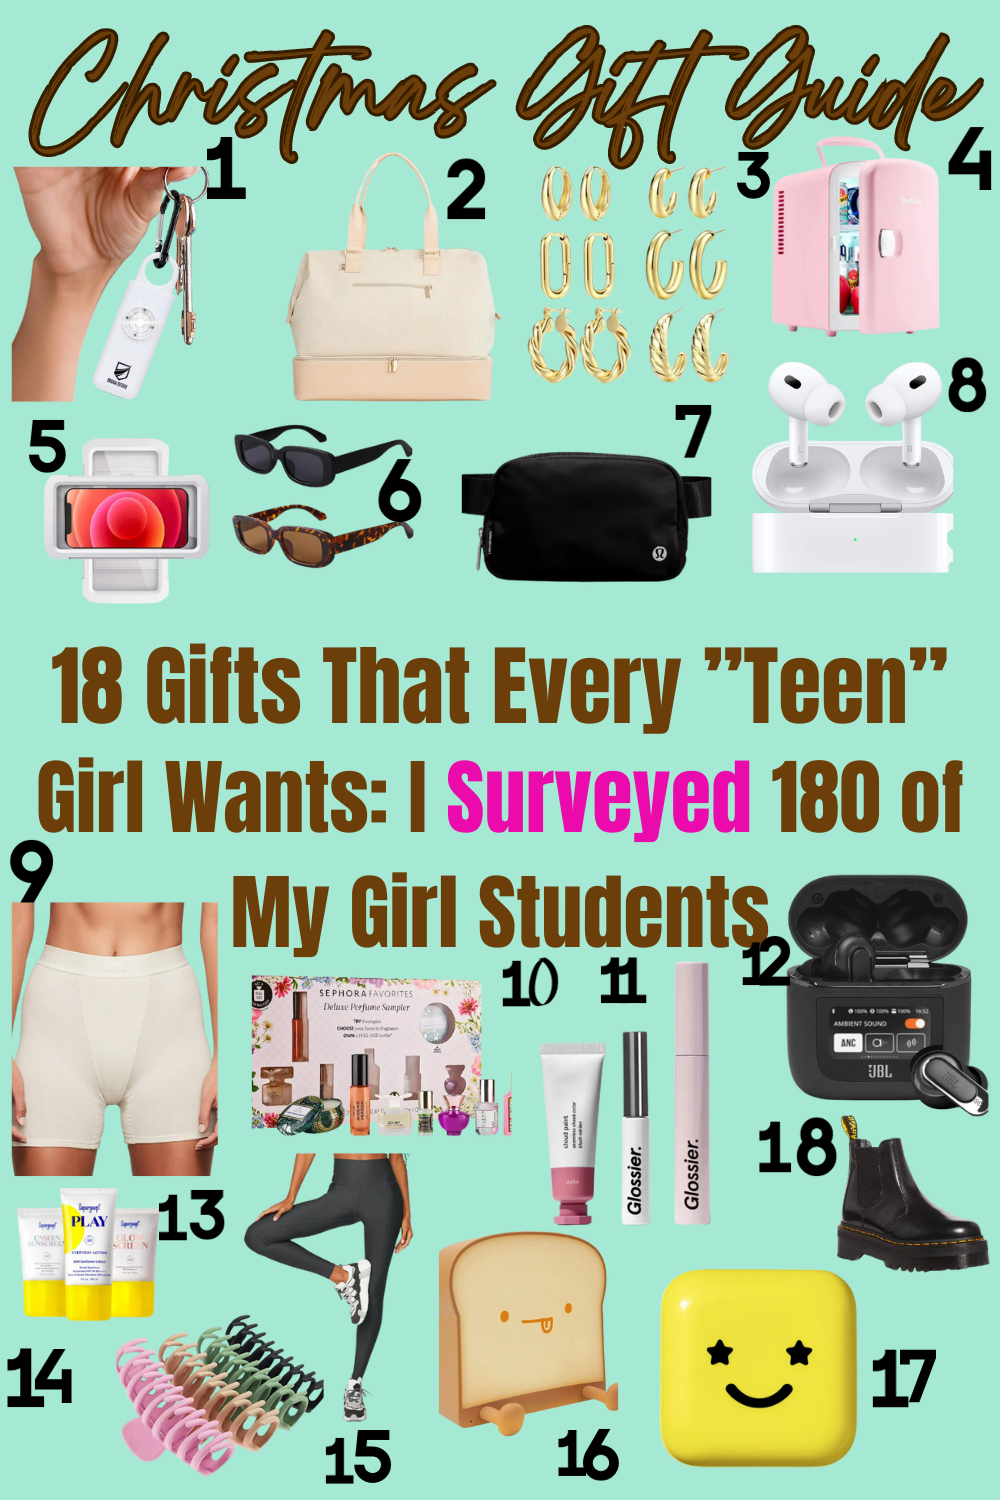 10 Christmas Gift Ideas for Tween Girls